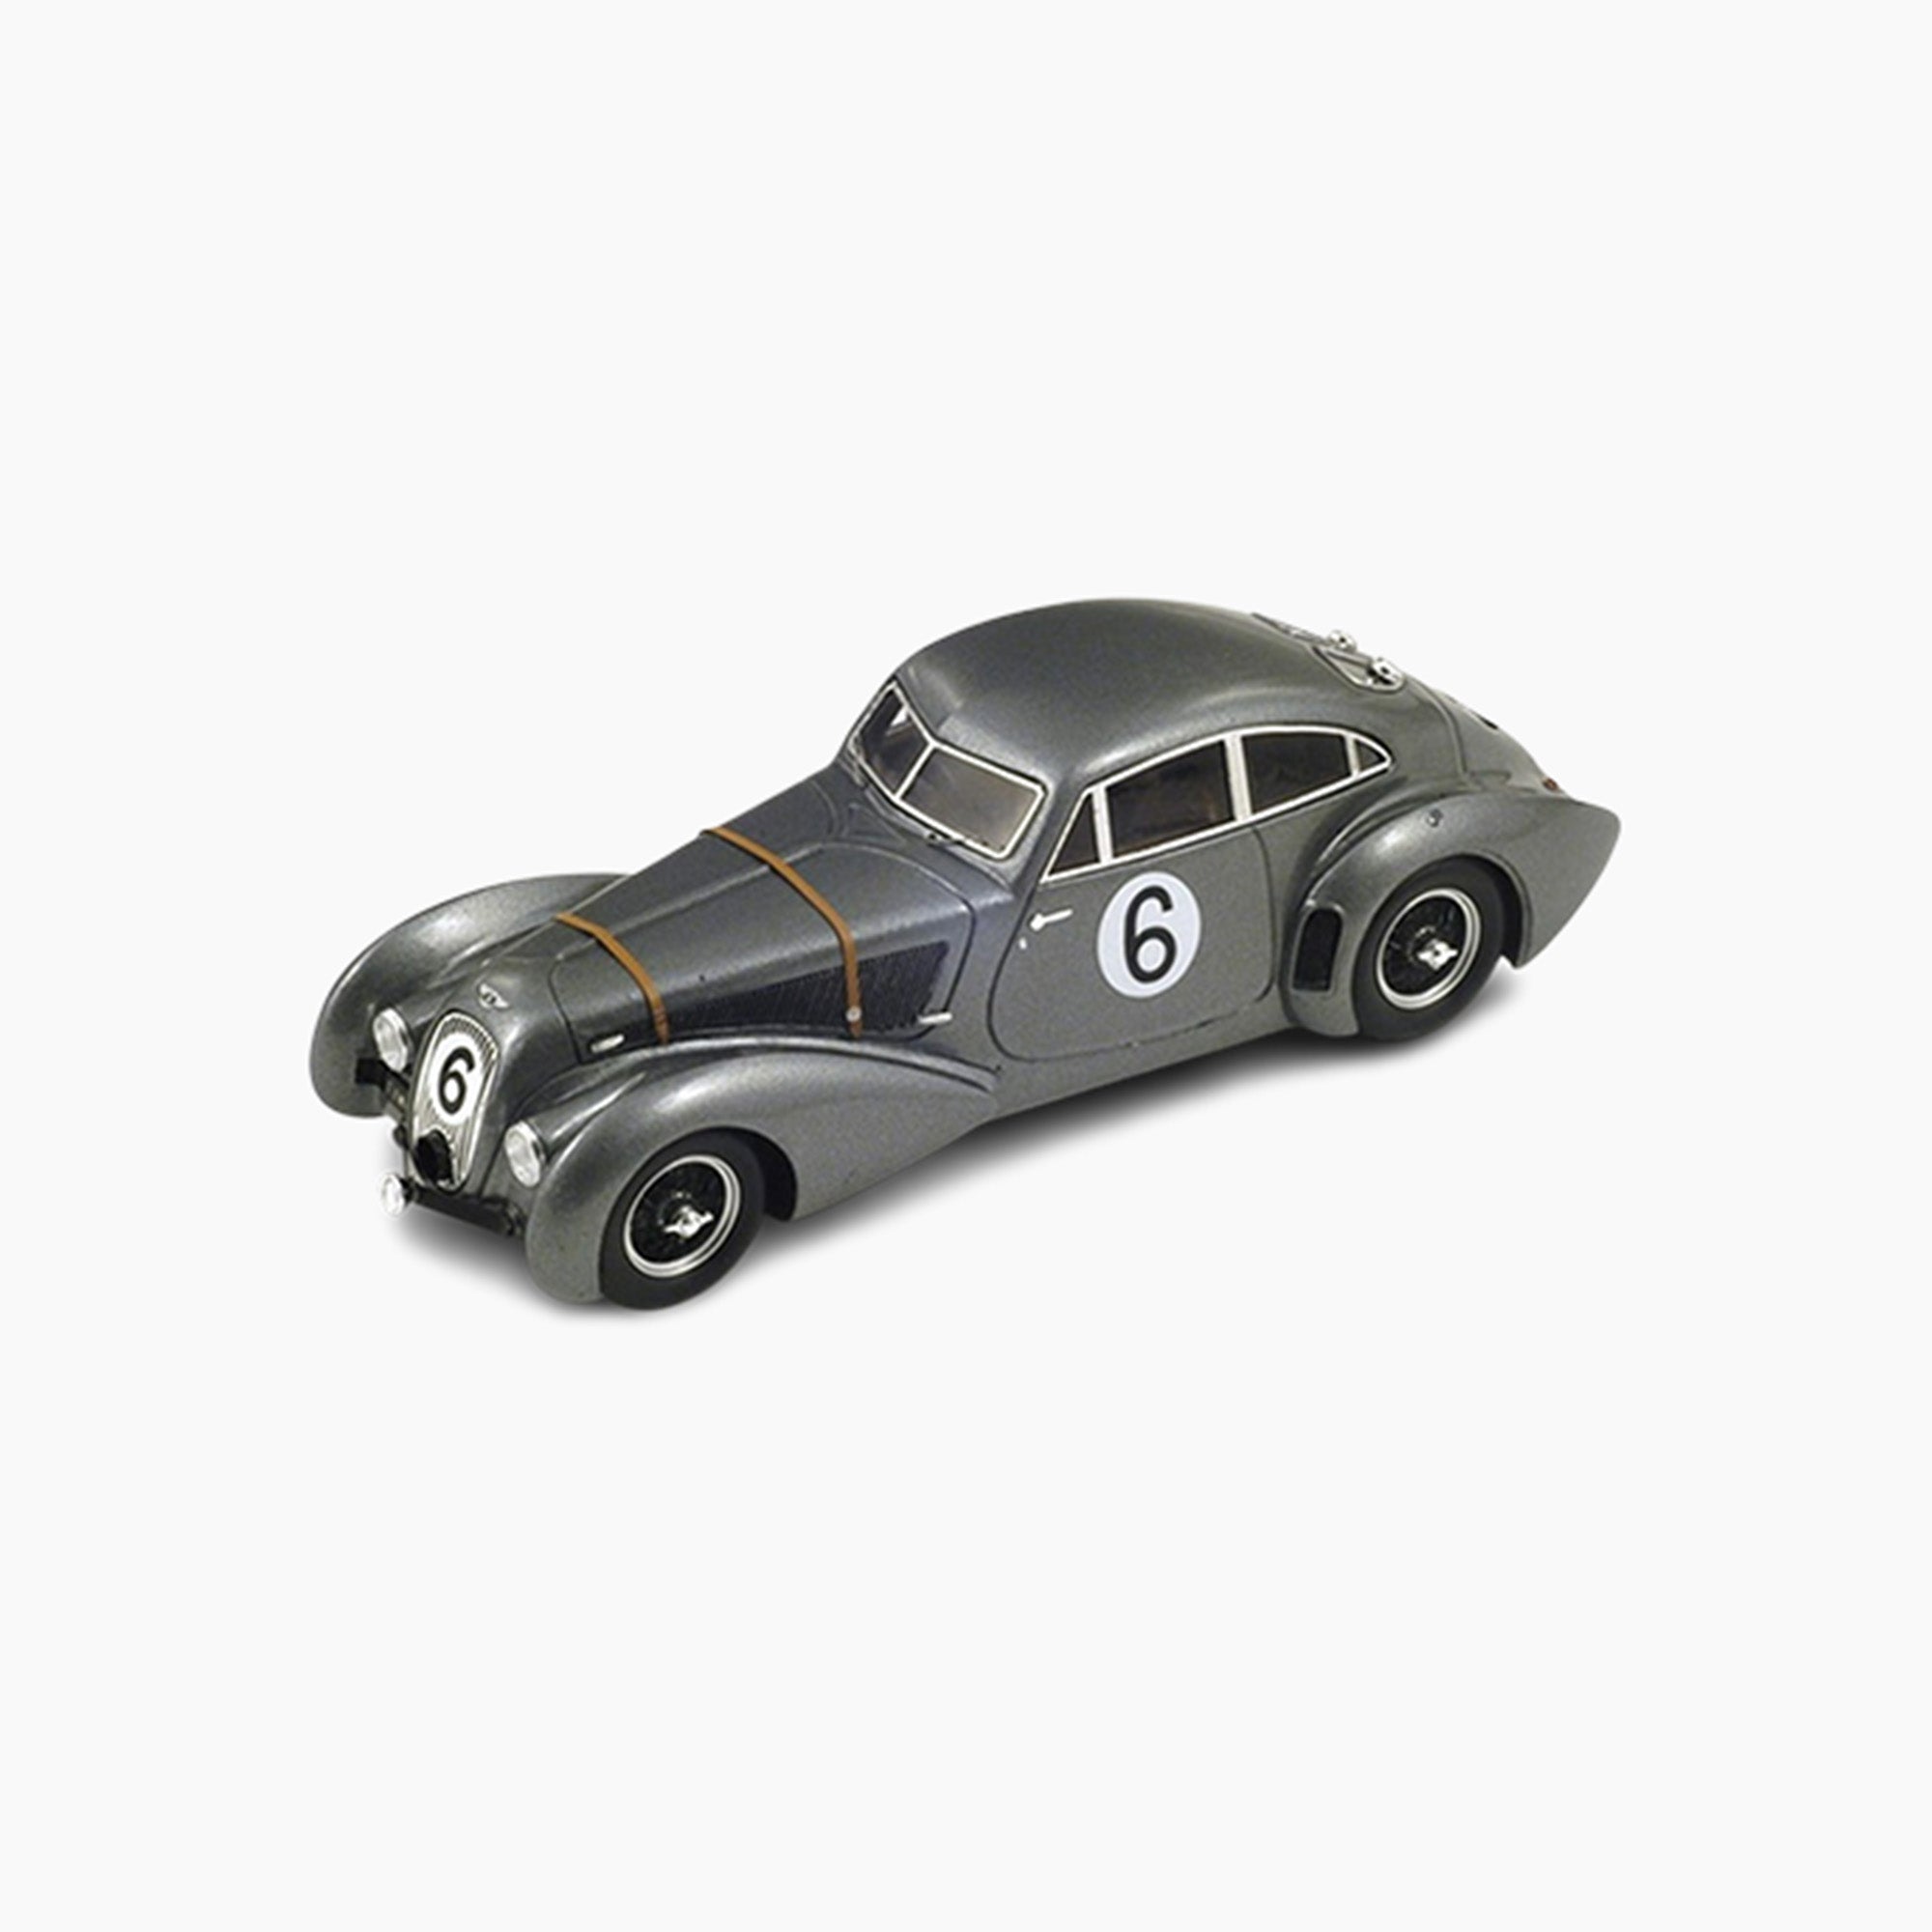 Corniche Paulin No.6 6th Le Mans 1949 "Soltan" Hay | 1:43 Scale Model-1:43 Scale Model-Spark Models-gpx-store